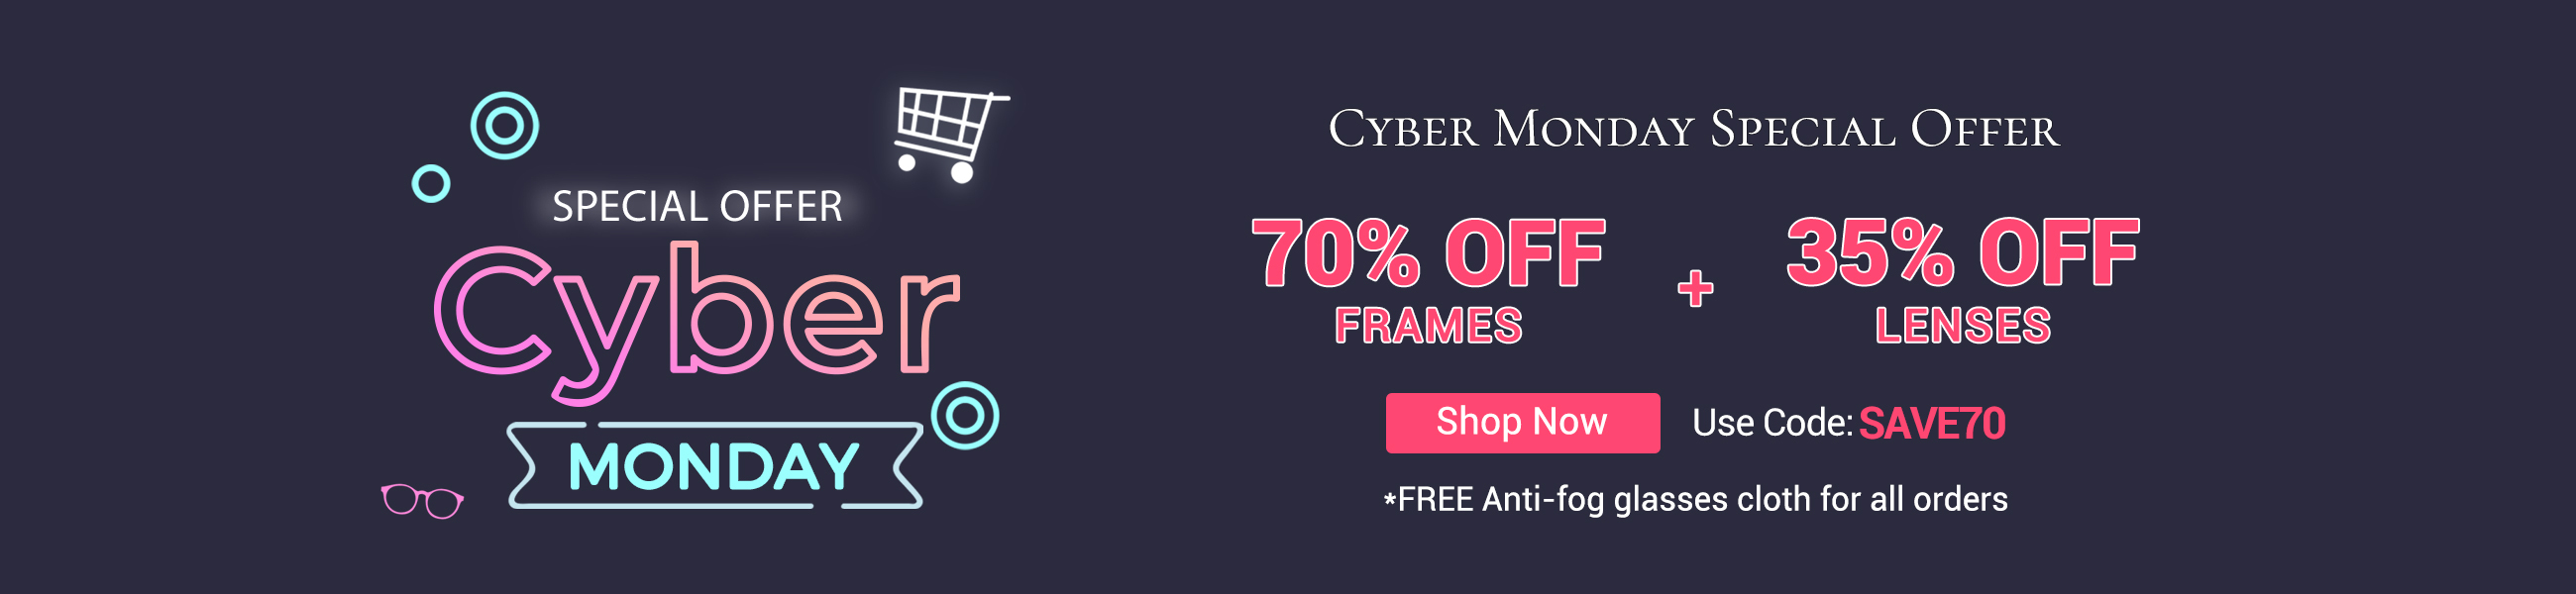 Cyber Monday,70% OFF Frames + 35% OFF Lenses